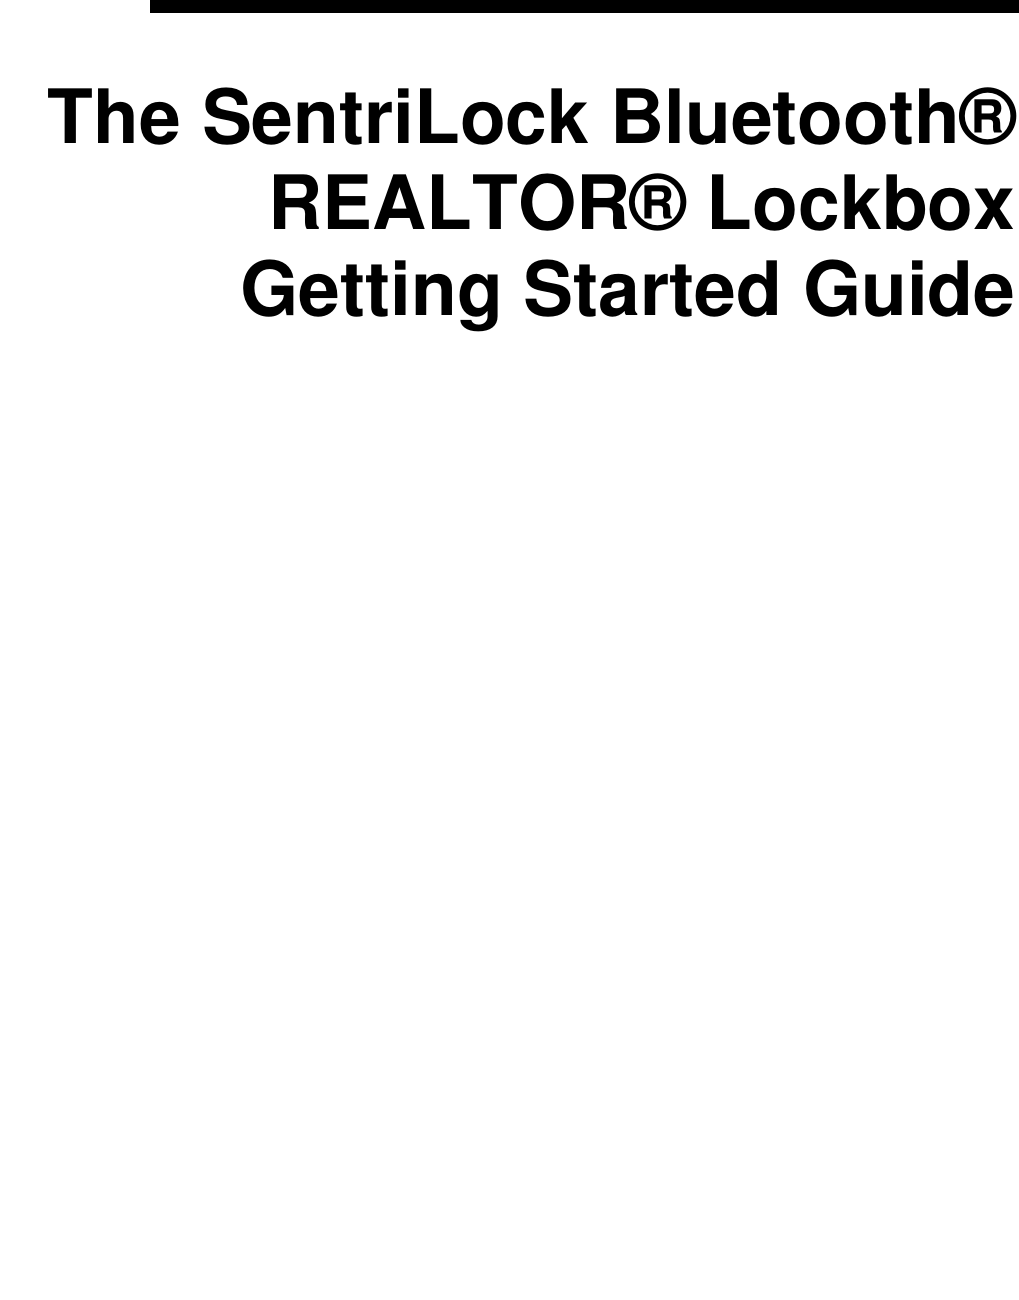    The SentriLock Bluetooth® REALTOR® Lockbox Getting Started Guide              